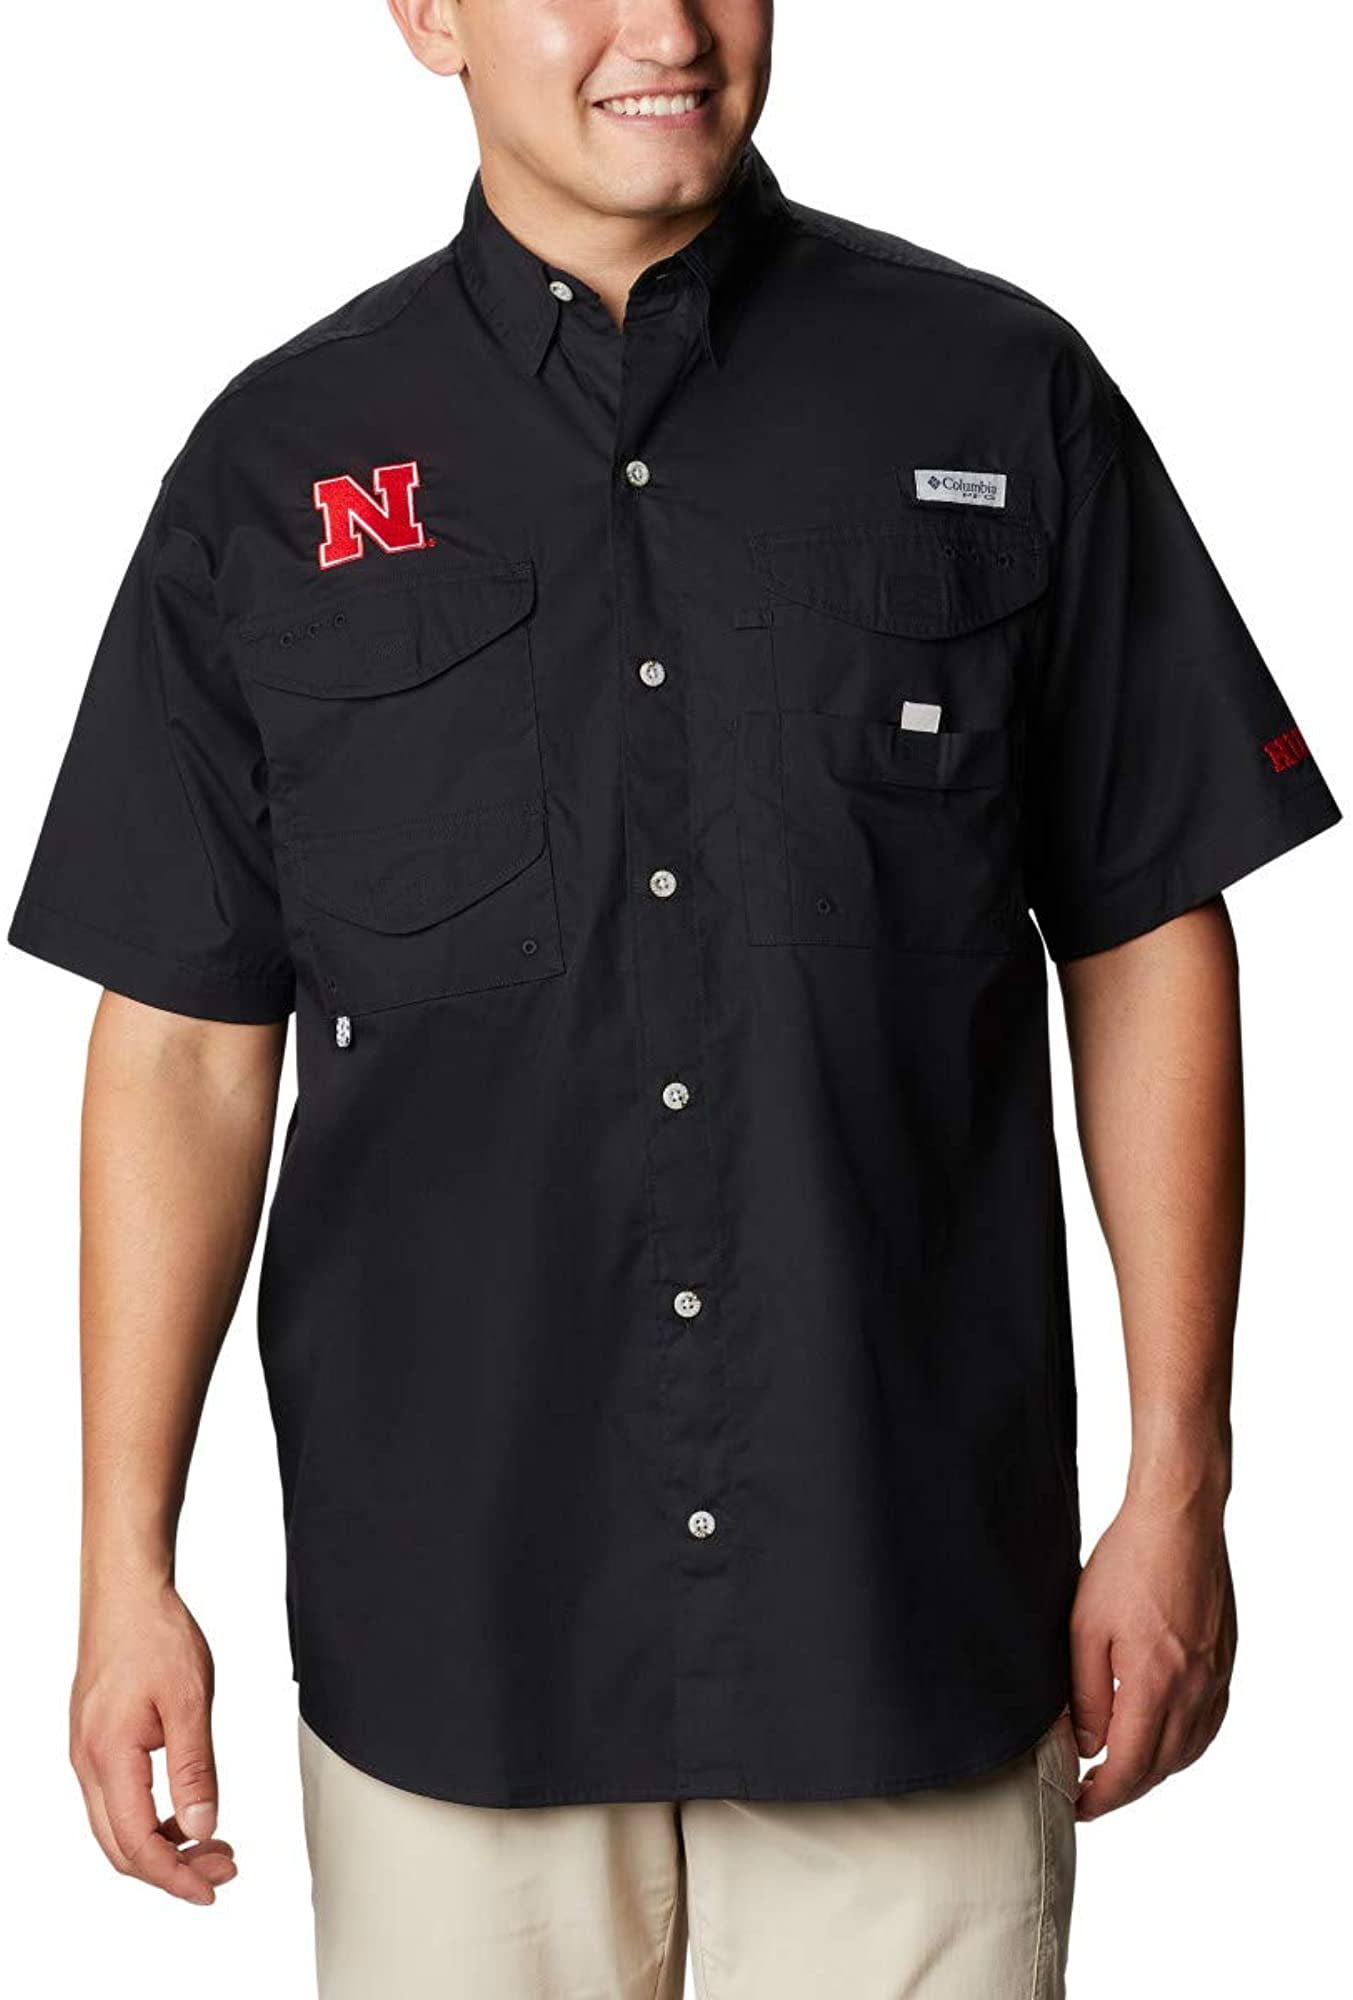 NCAA Mens Collegiate Bonehead Short Sleeve Shirt